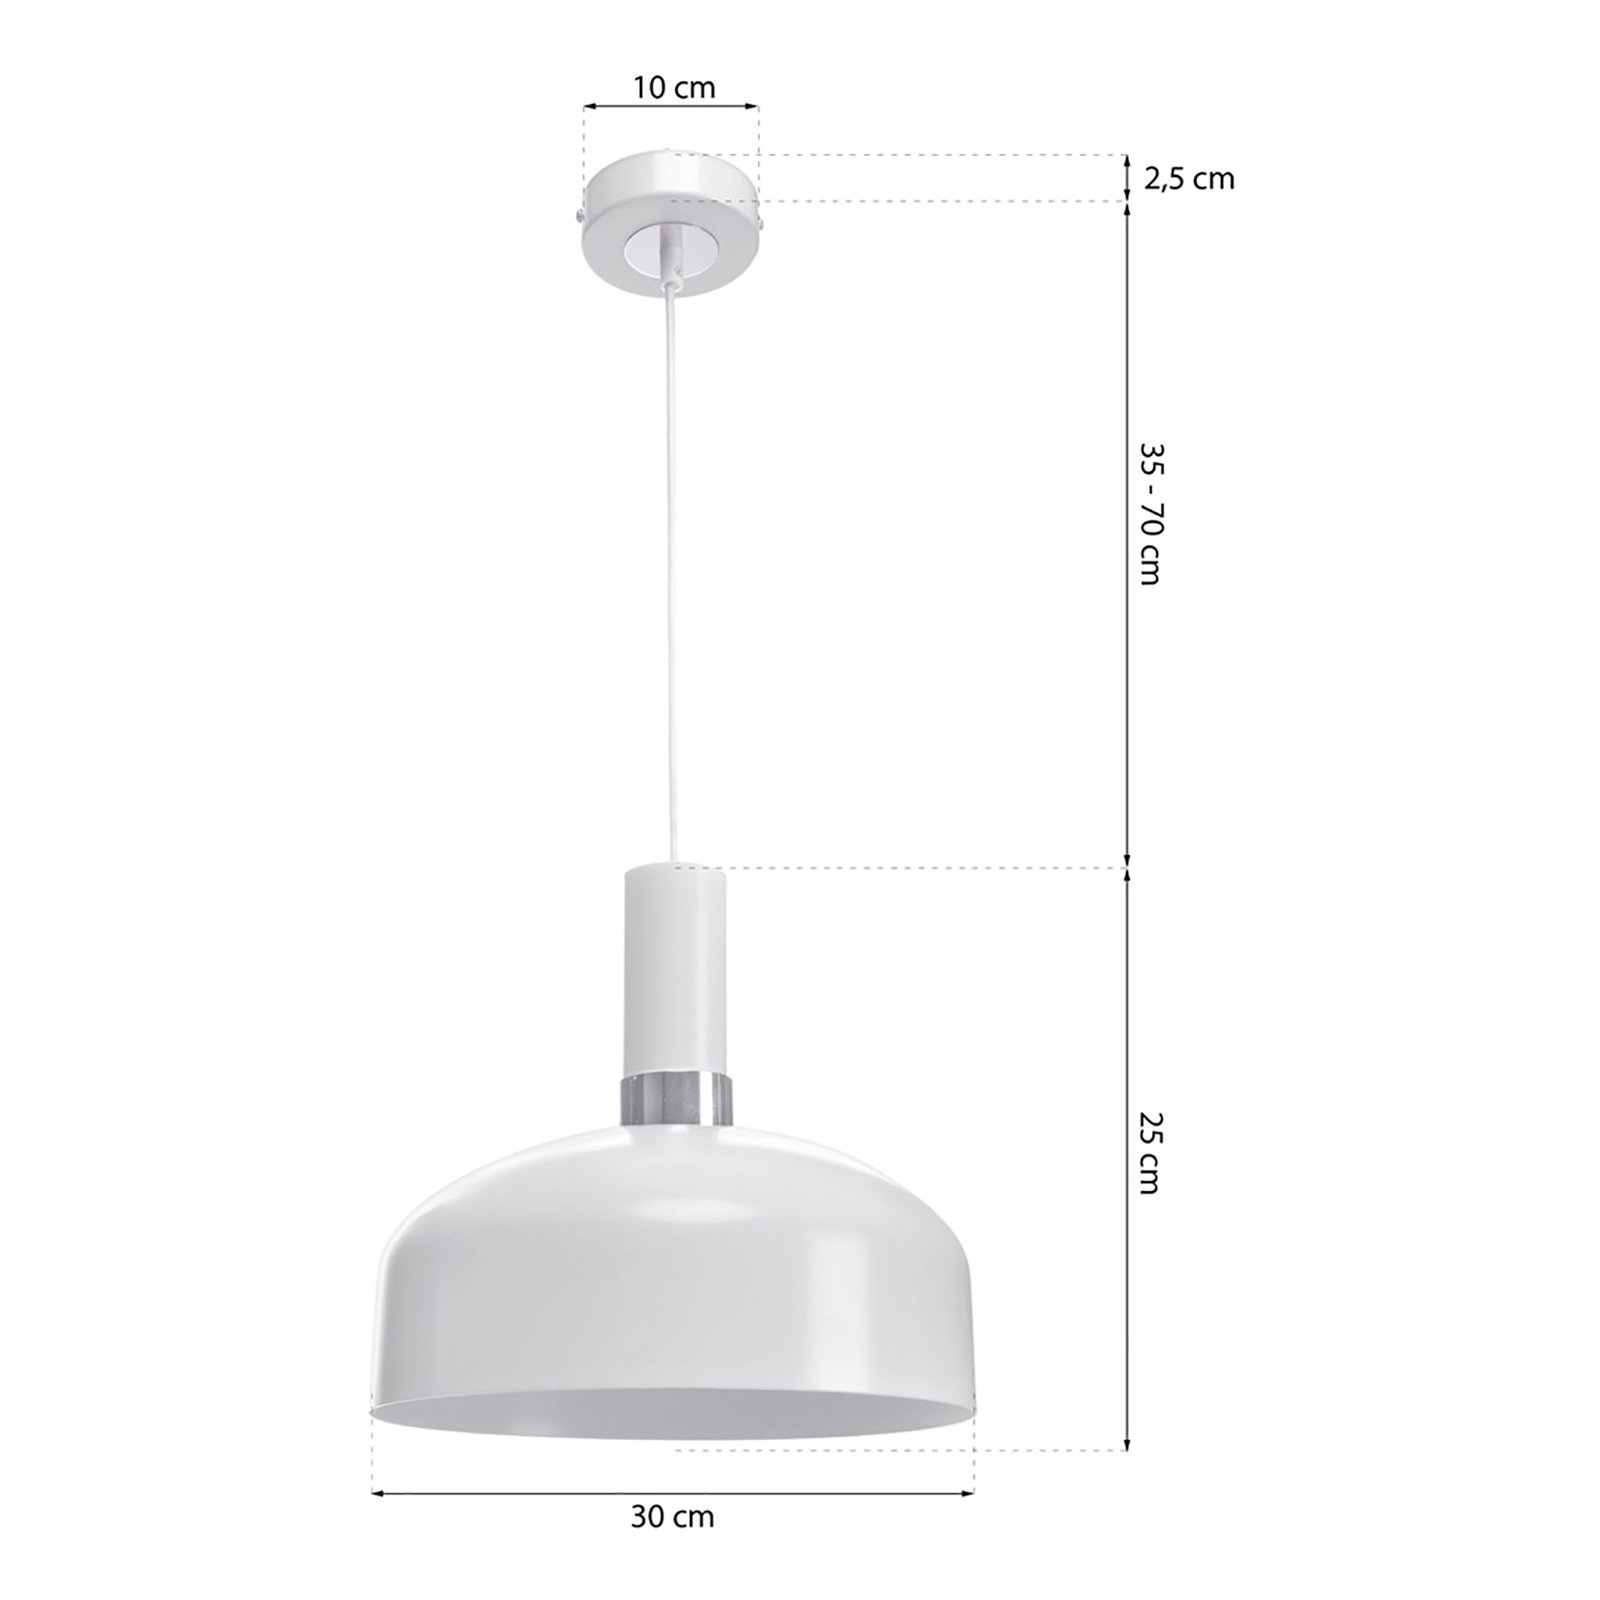 Malmo pendant light, white lampshade